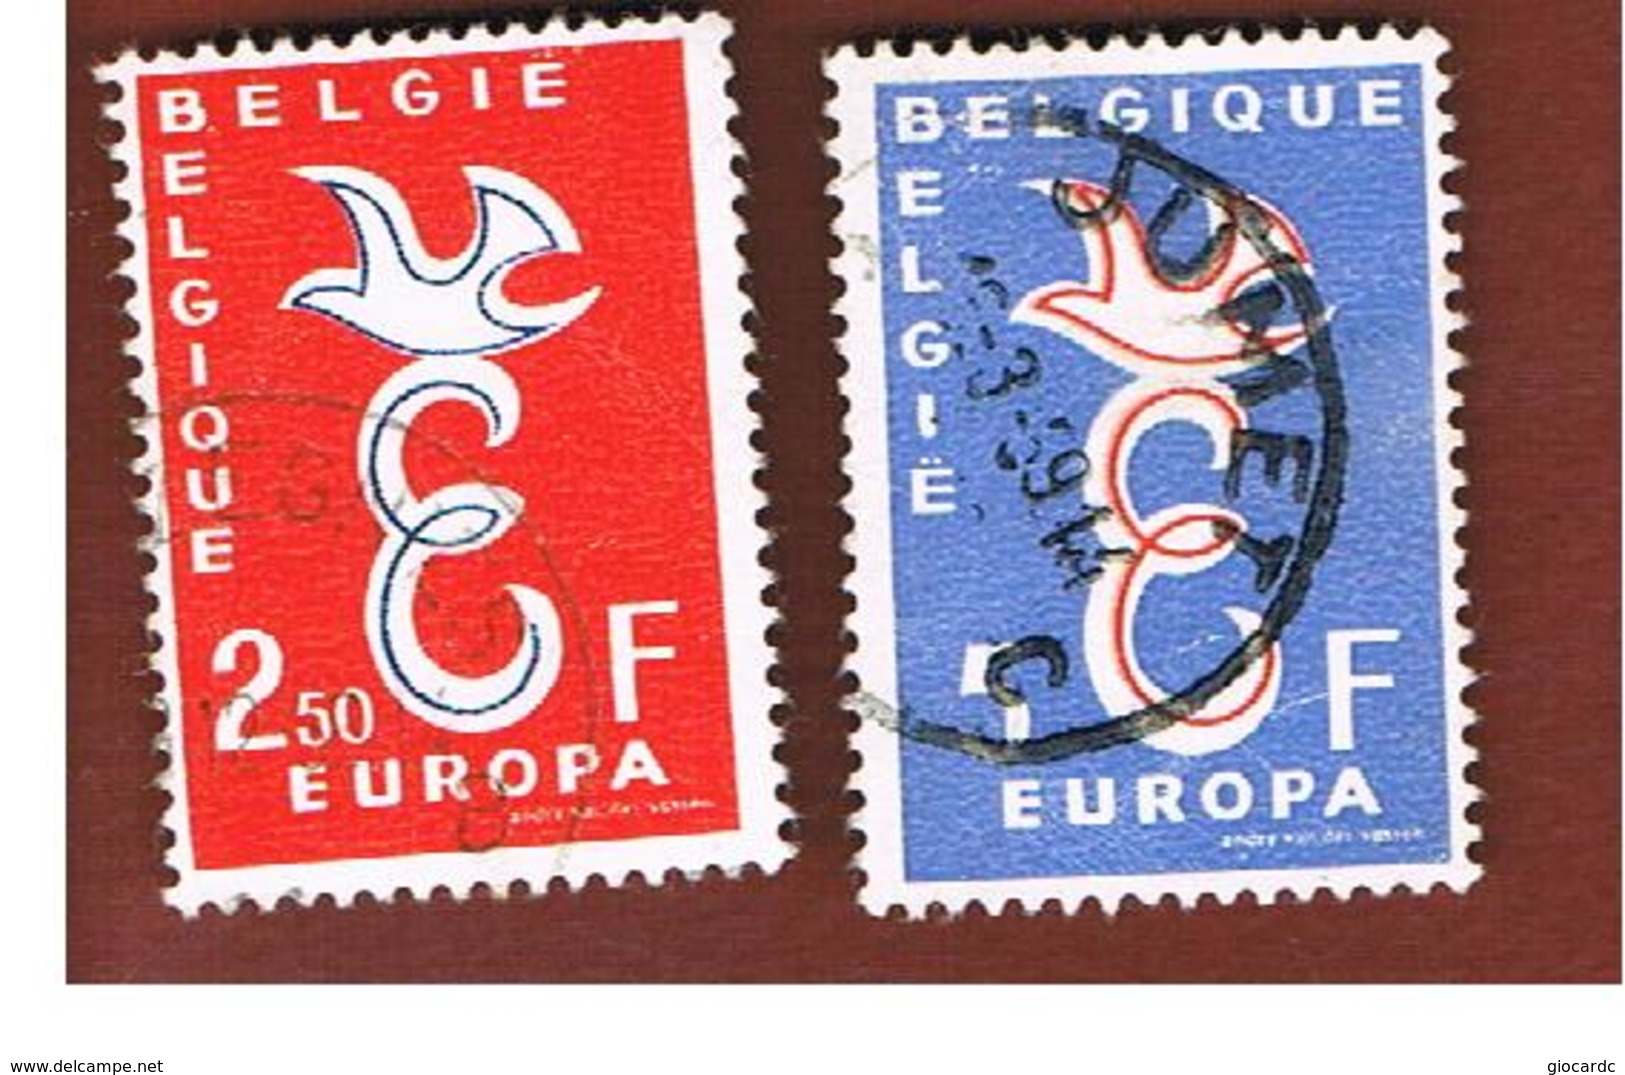 BELGIO (BELGIUM)  - 1958 EUROPA  - USED - 1958